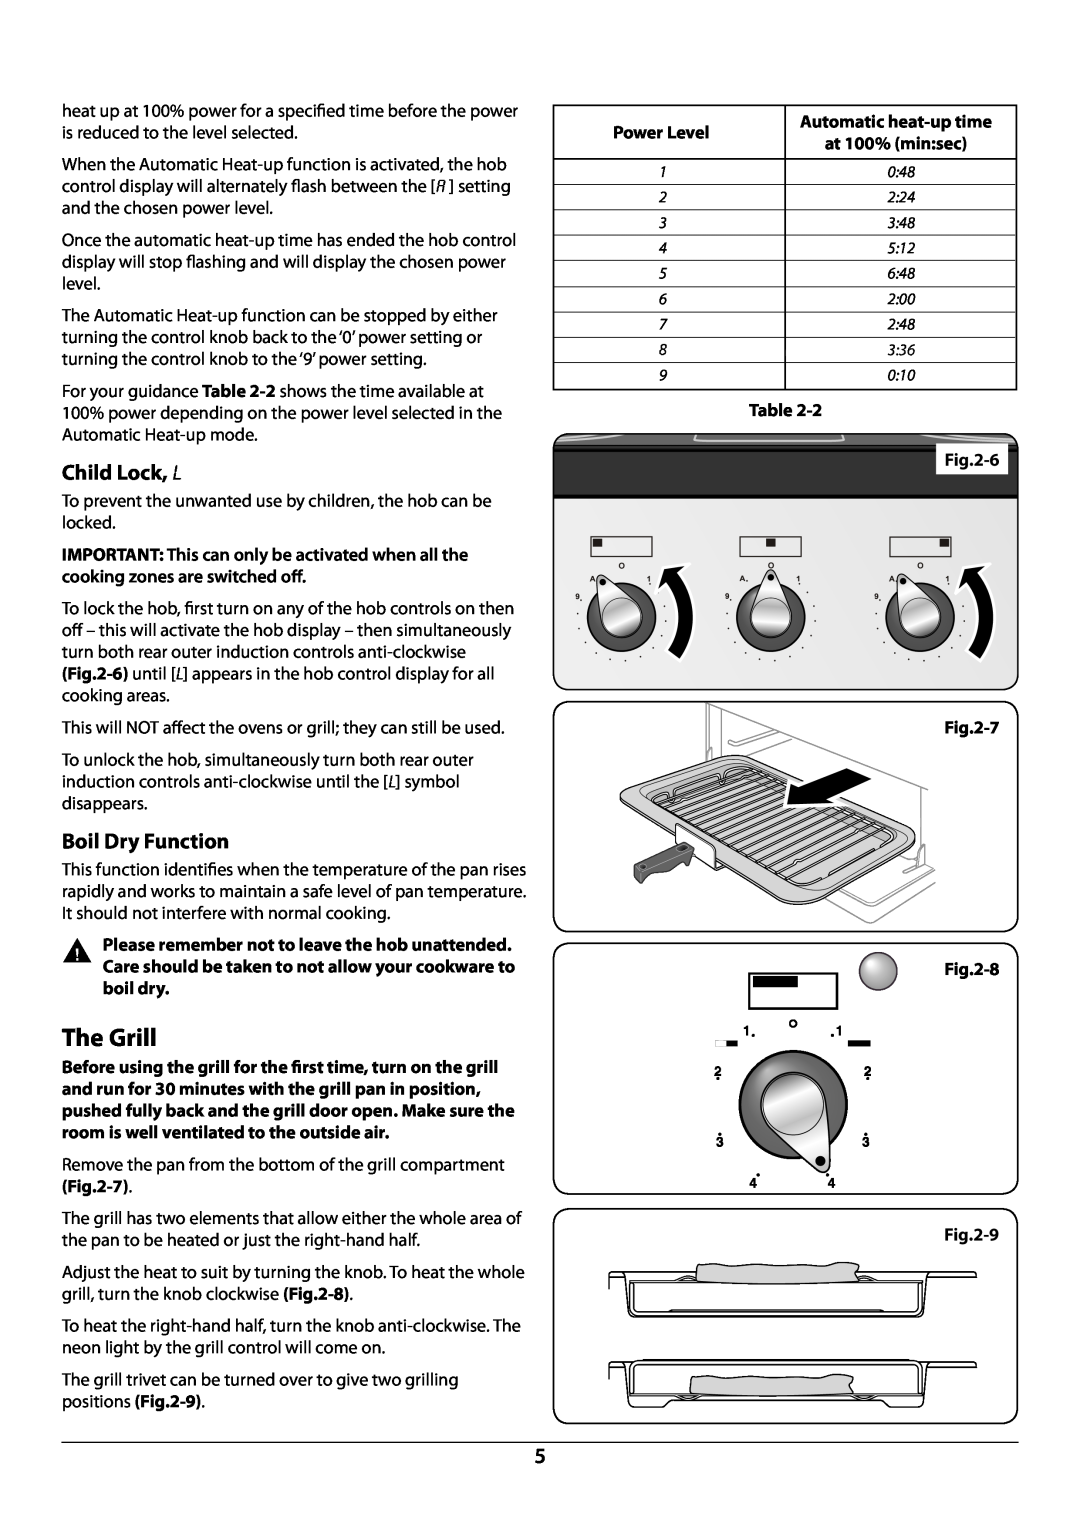 Rangemaster U109948 - 04 manual The Grill, Child Lock, L, Boil Dry Function, ArtNo.240-0001 Toledo grill control 